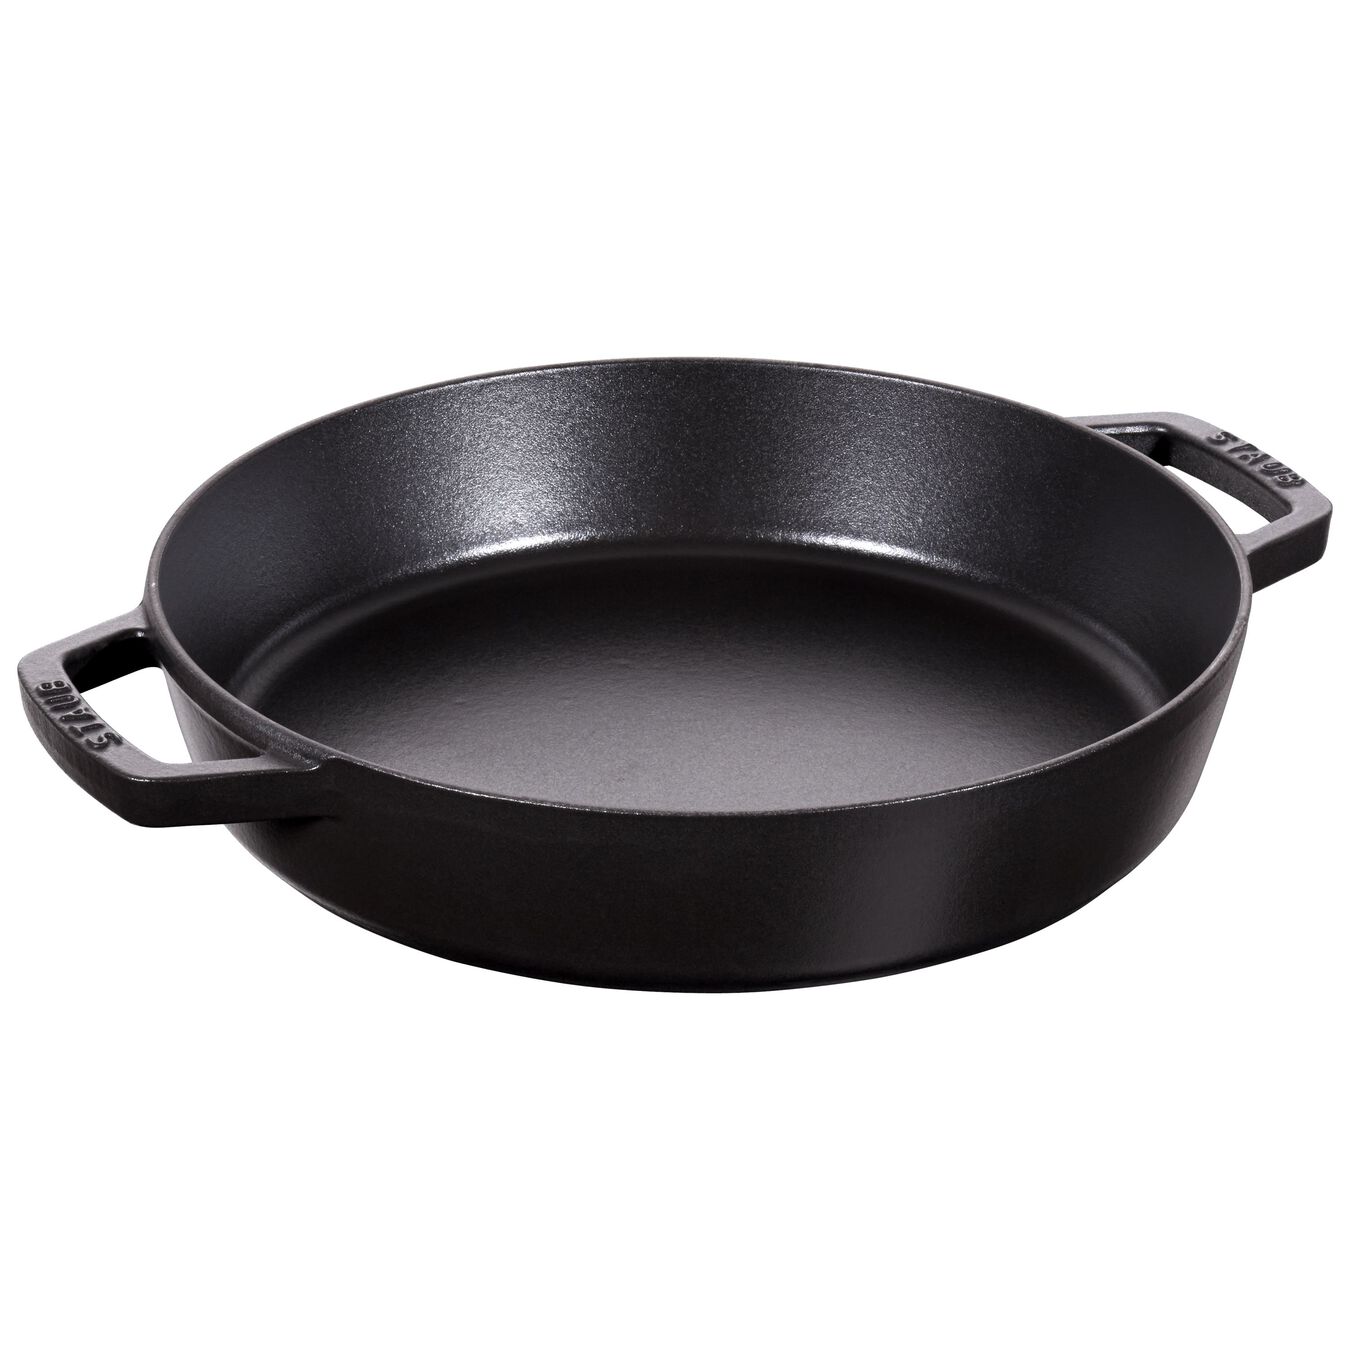 26 cm / 10 inch cast iron Frying pan, black,,large 1